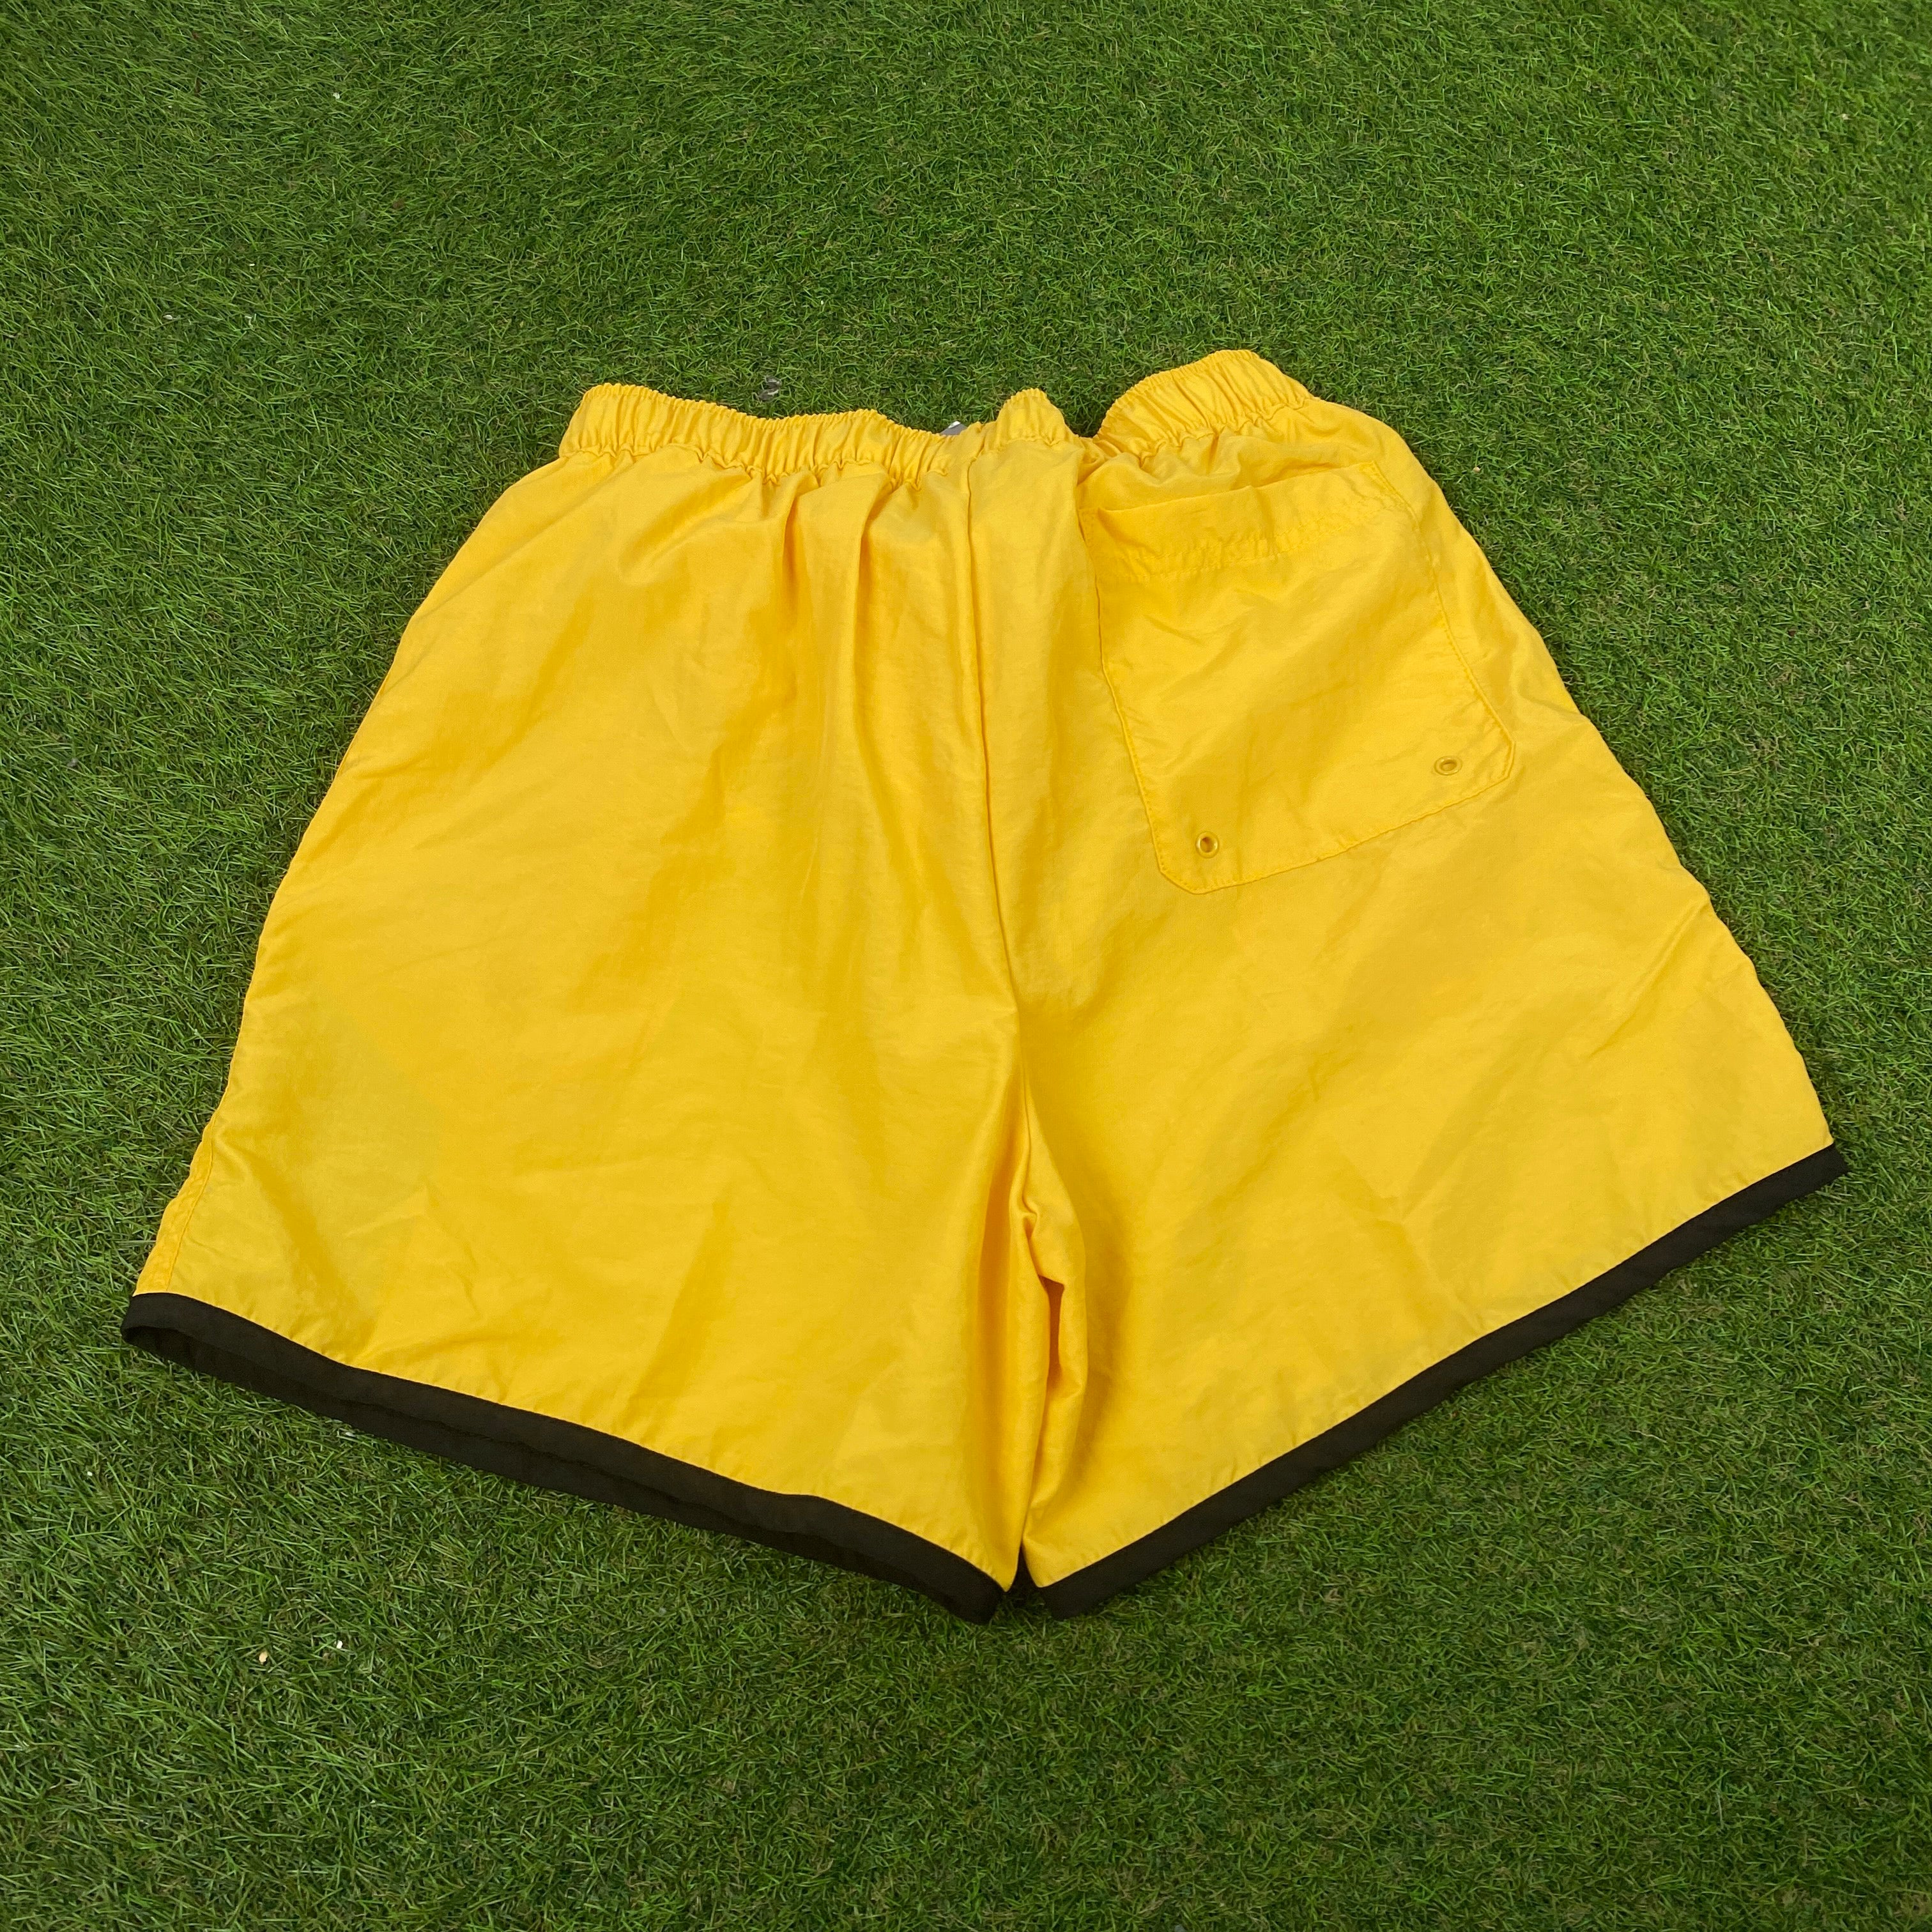 00s Nike Shorts Yellow XS